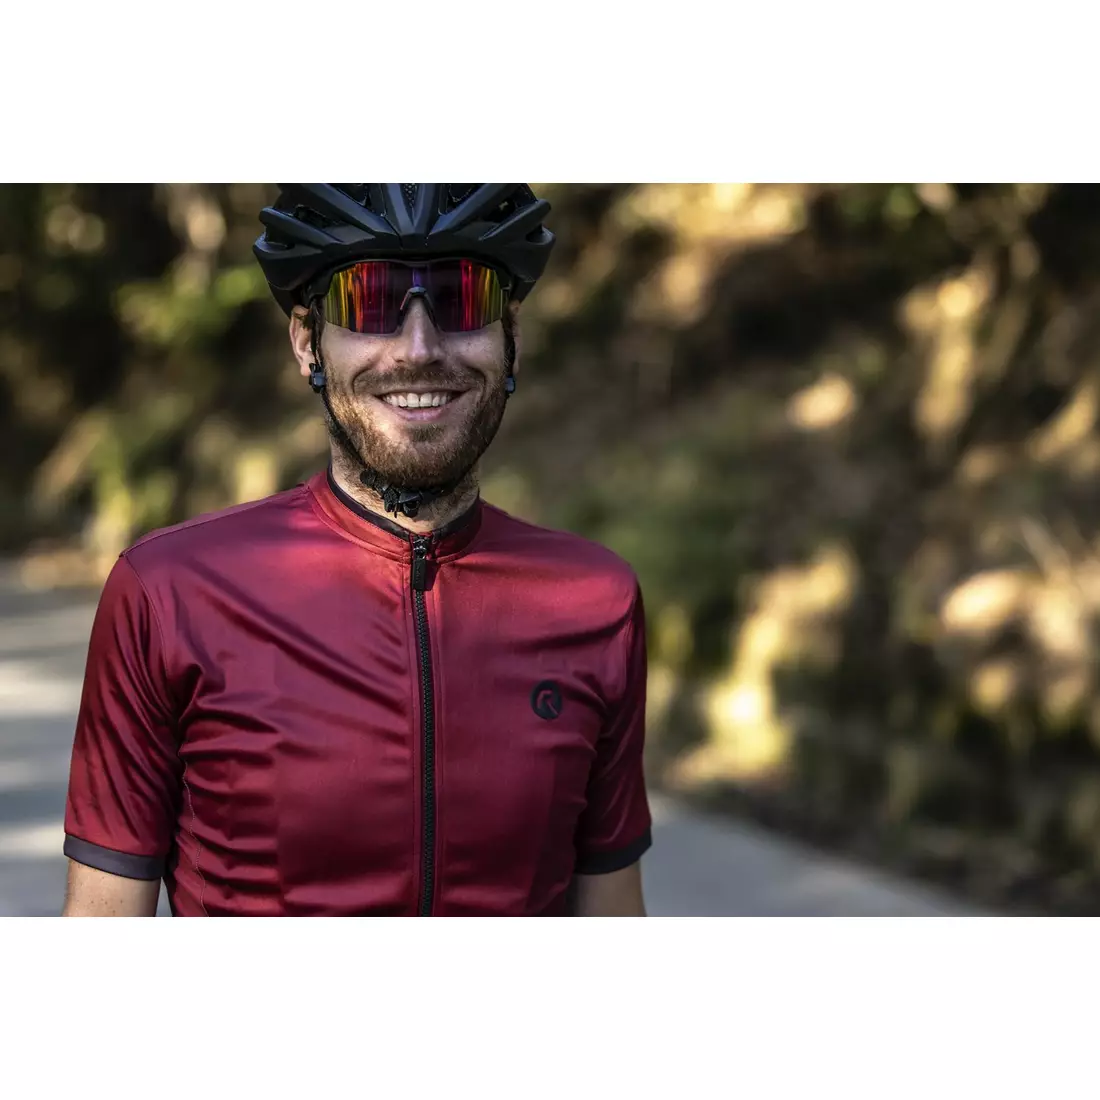 ROGELLI ESSENTIAL men's cycling jersey, maroon